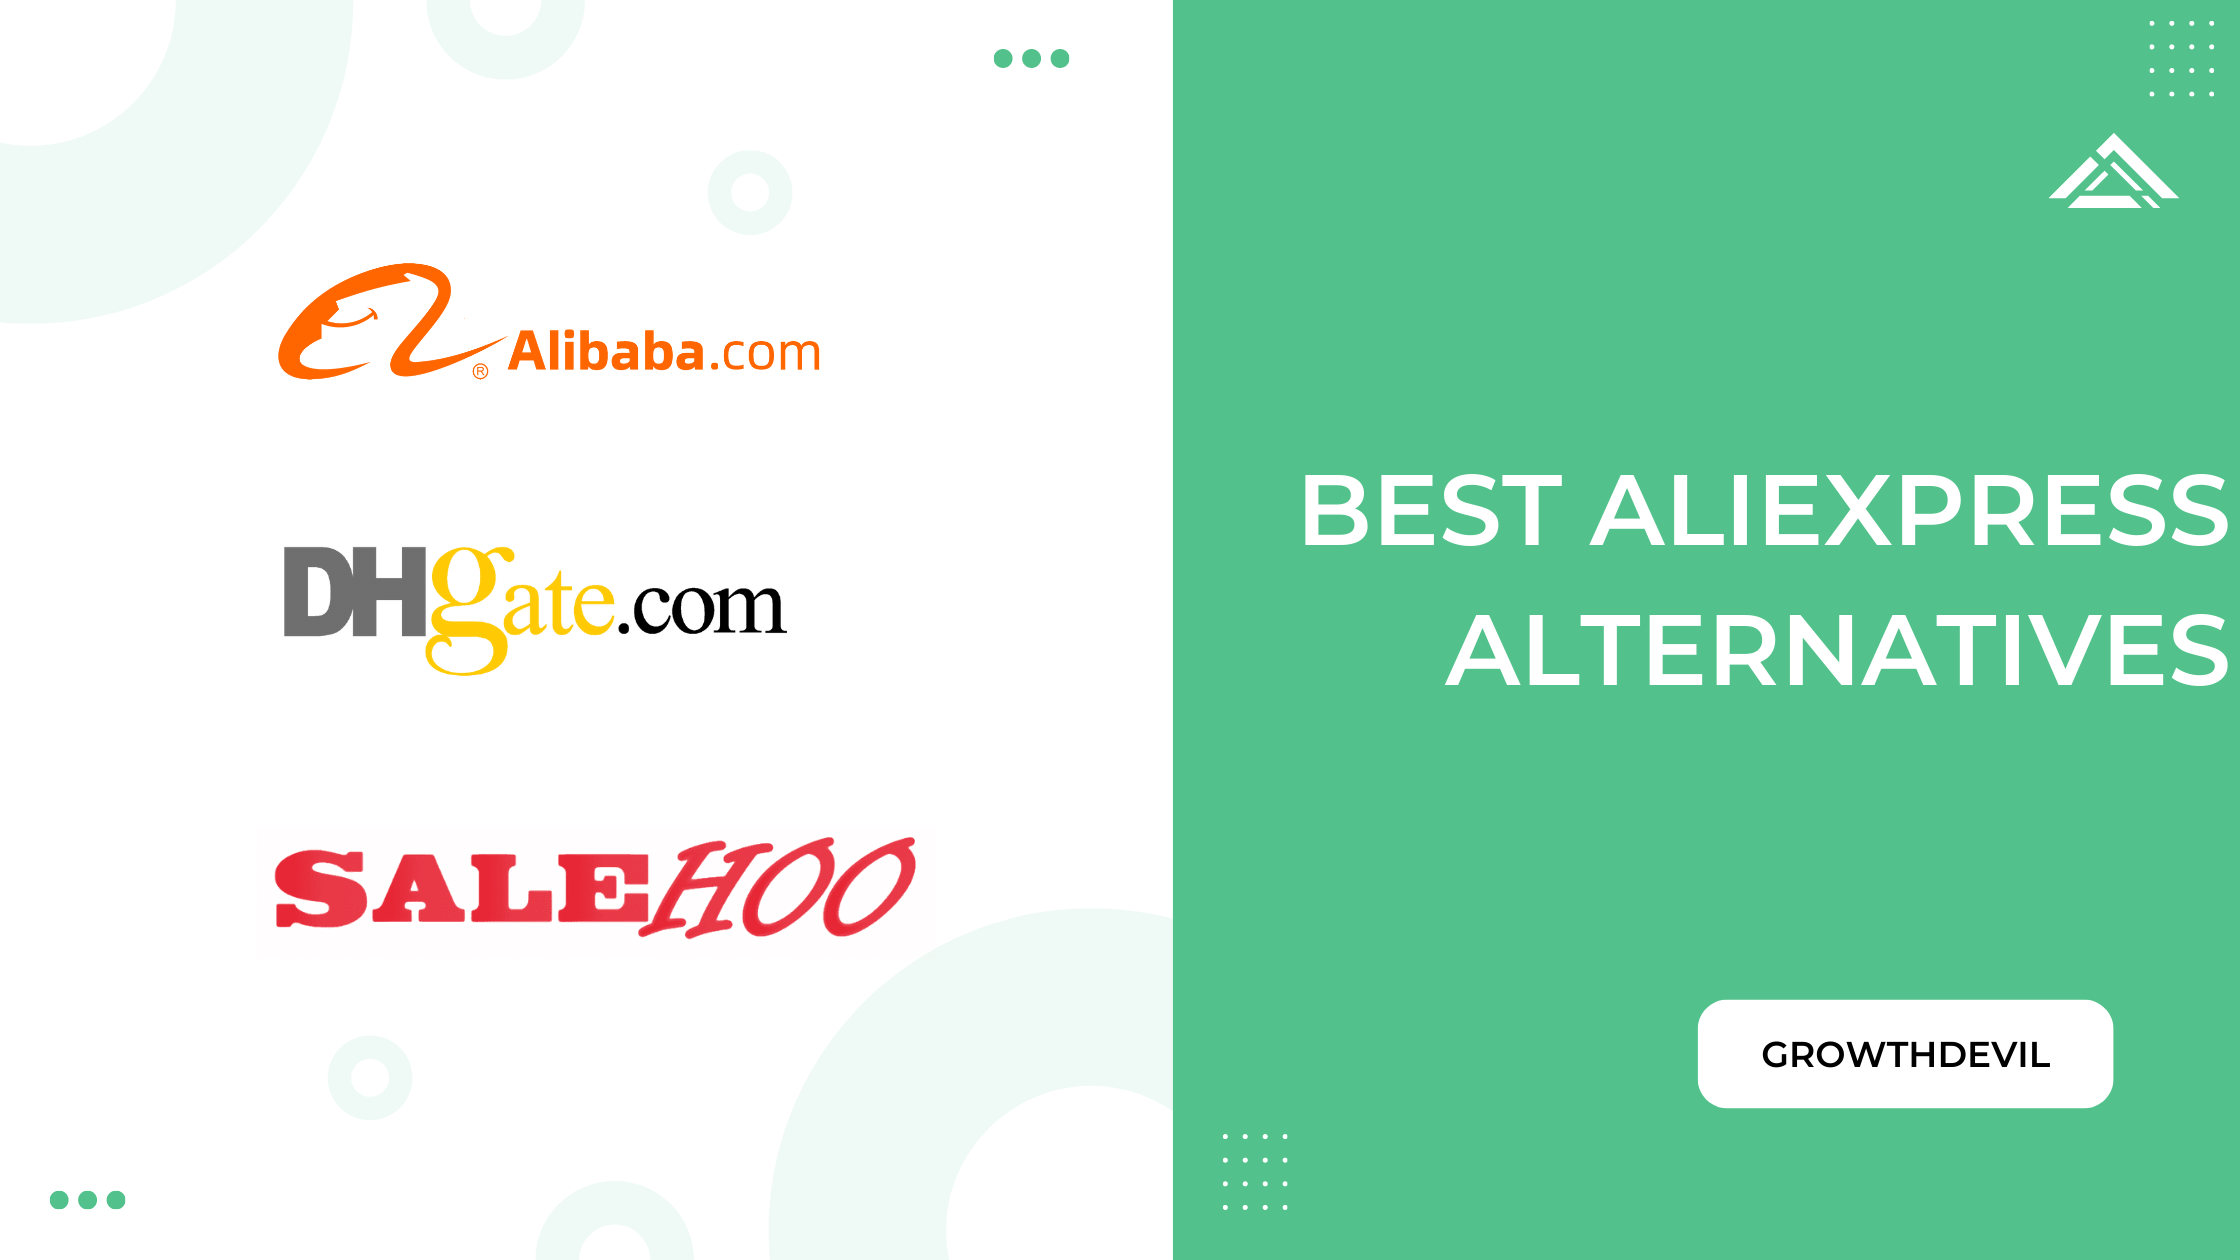 Best AliExpress Alternatives - GrowthDevil